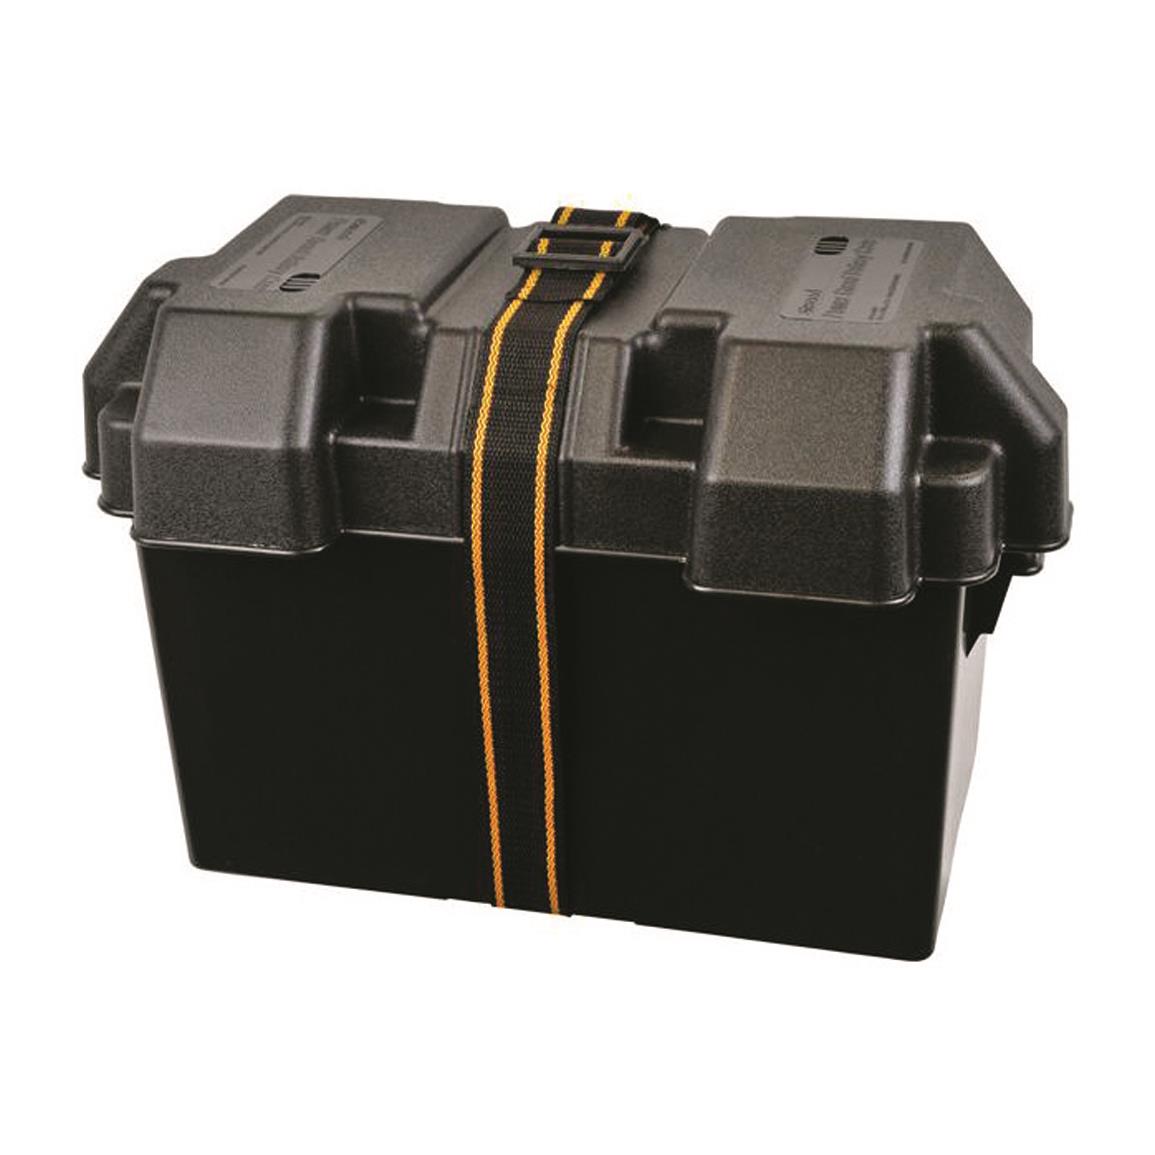 Attwood PowerGuard 27 Battery Box